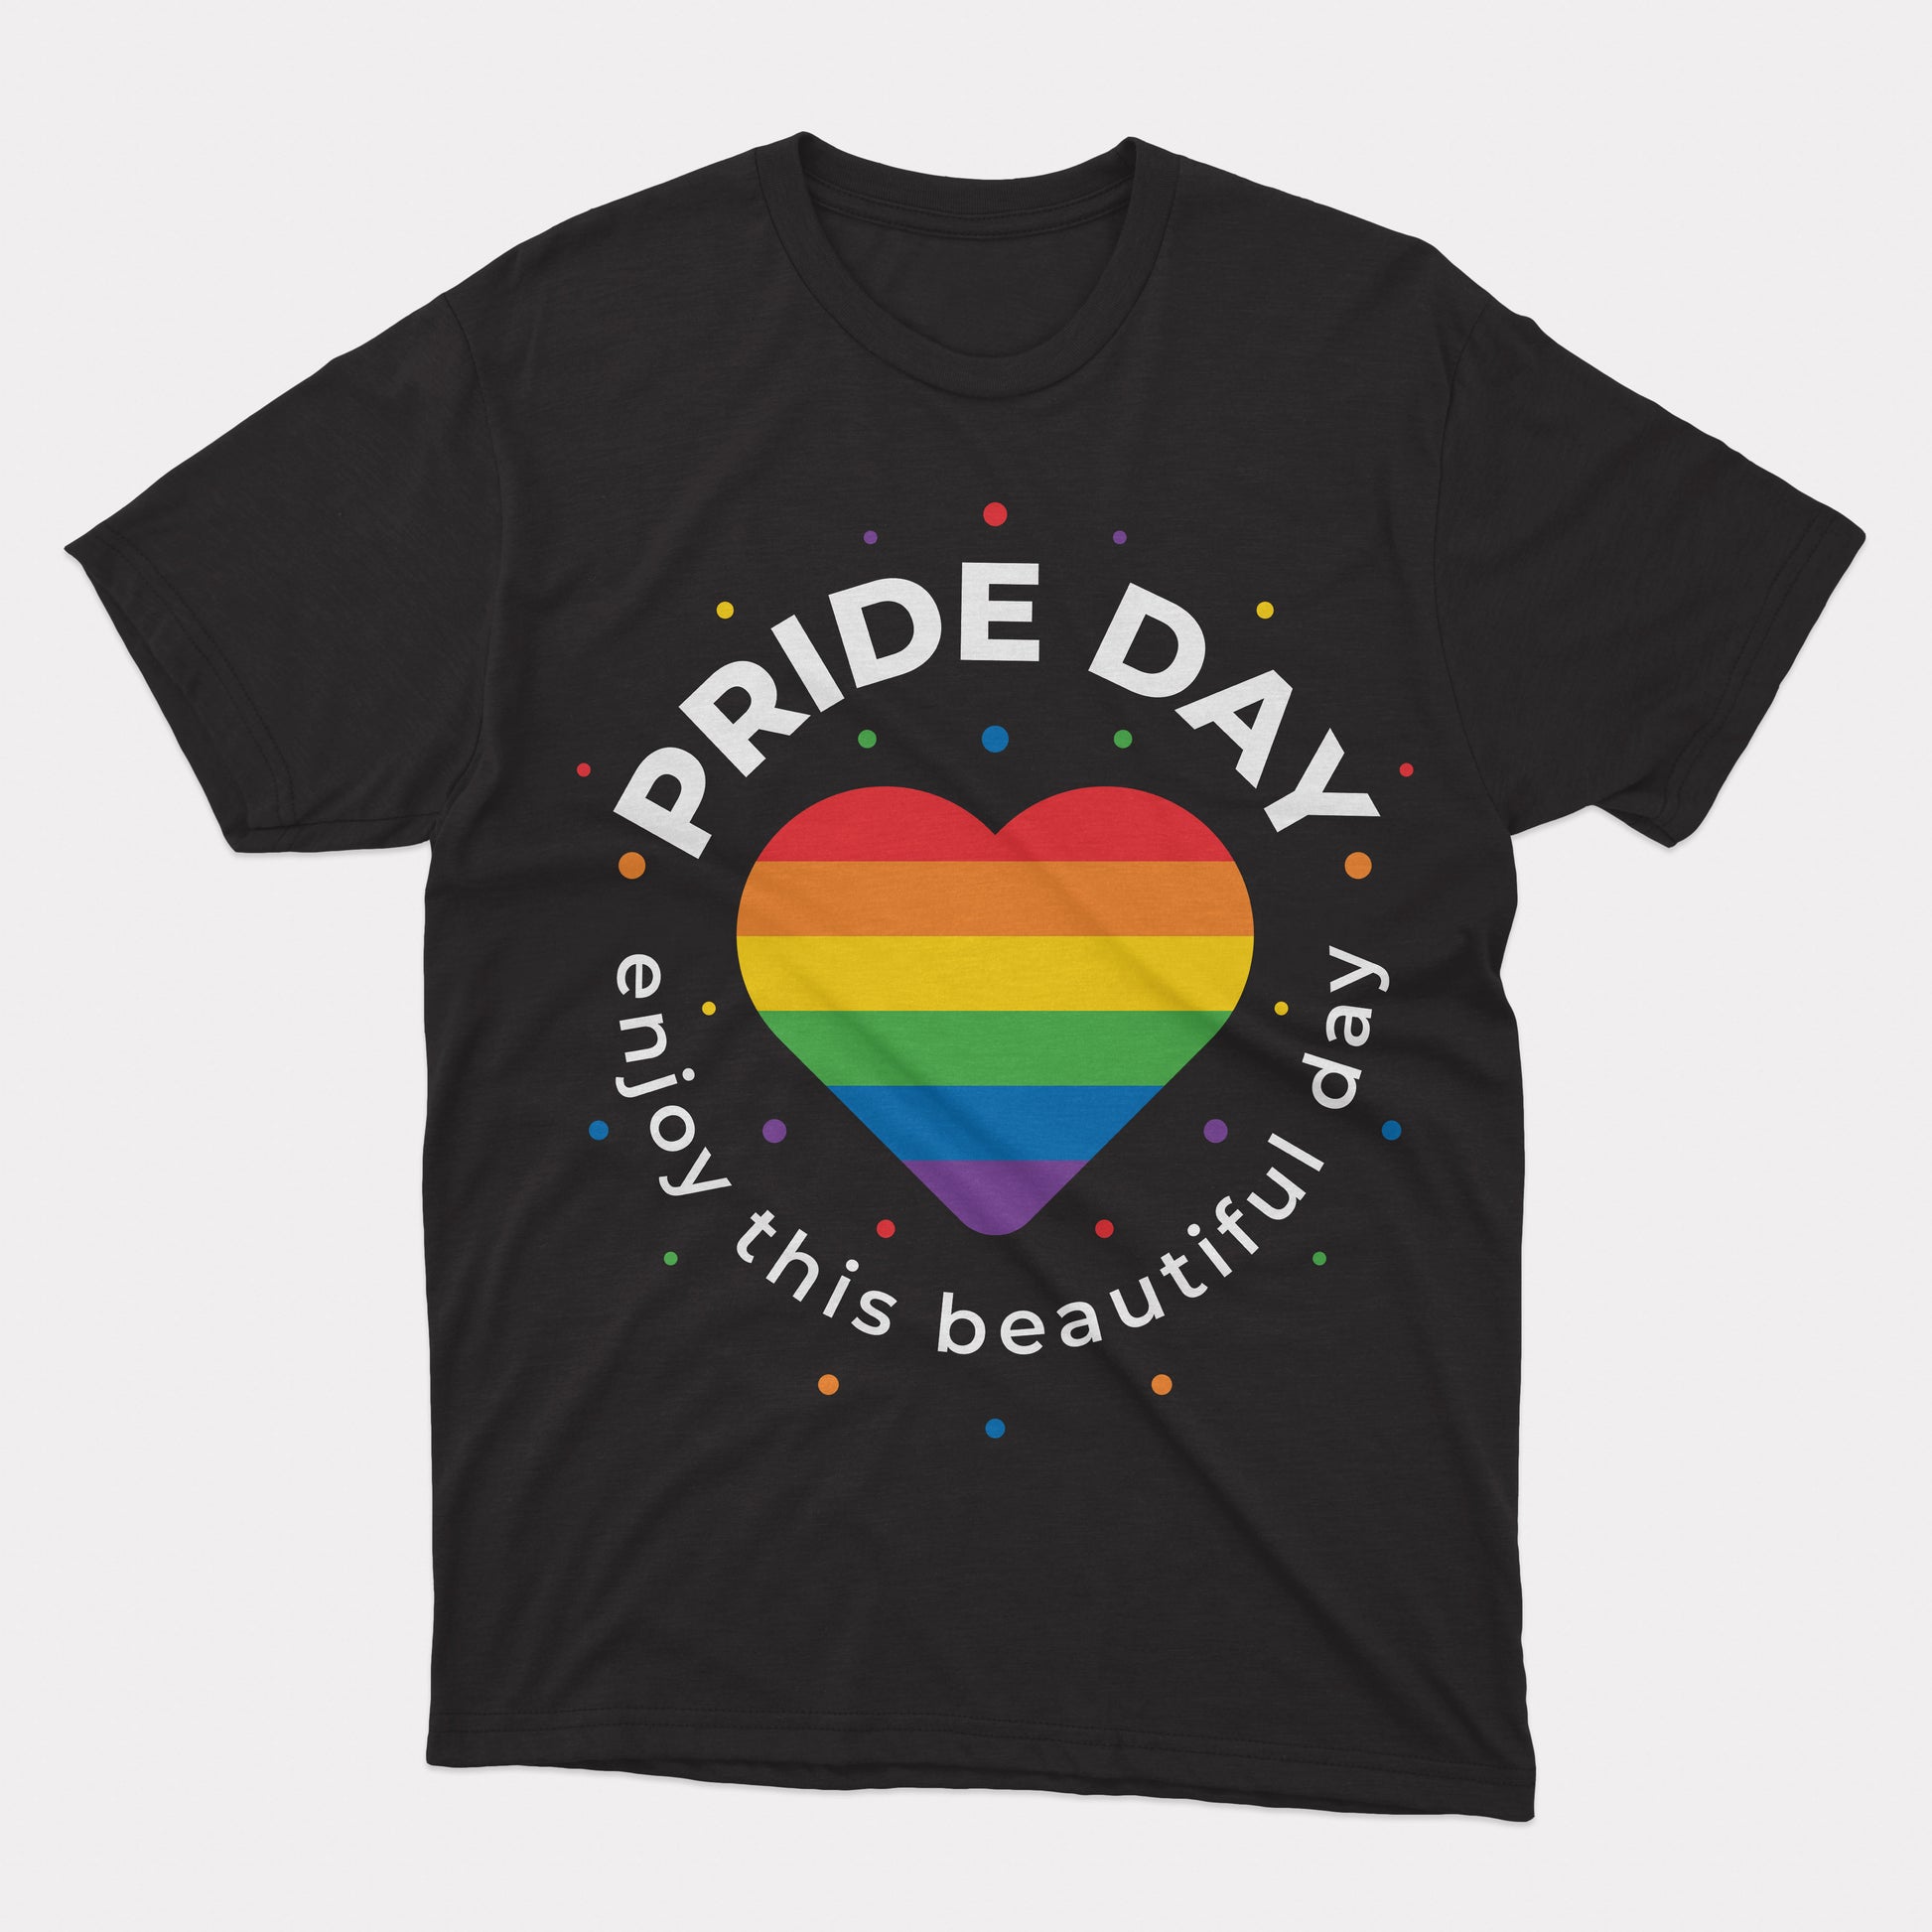 Pride Day enjoy this beautiful day LGBT T shirt Bdk3